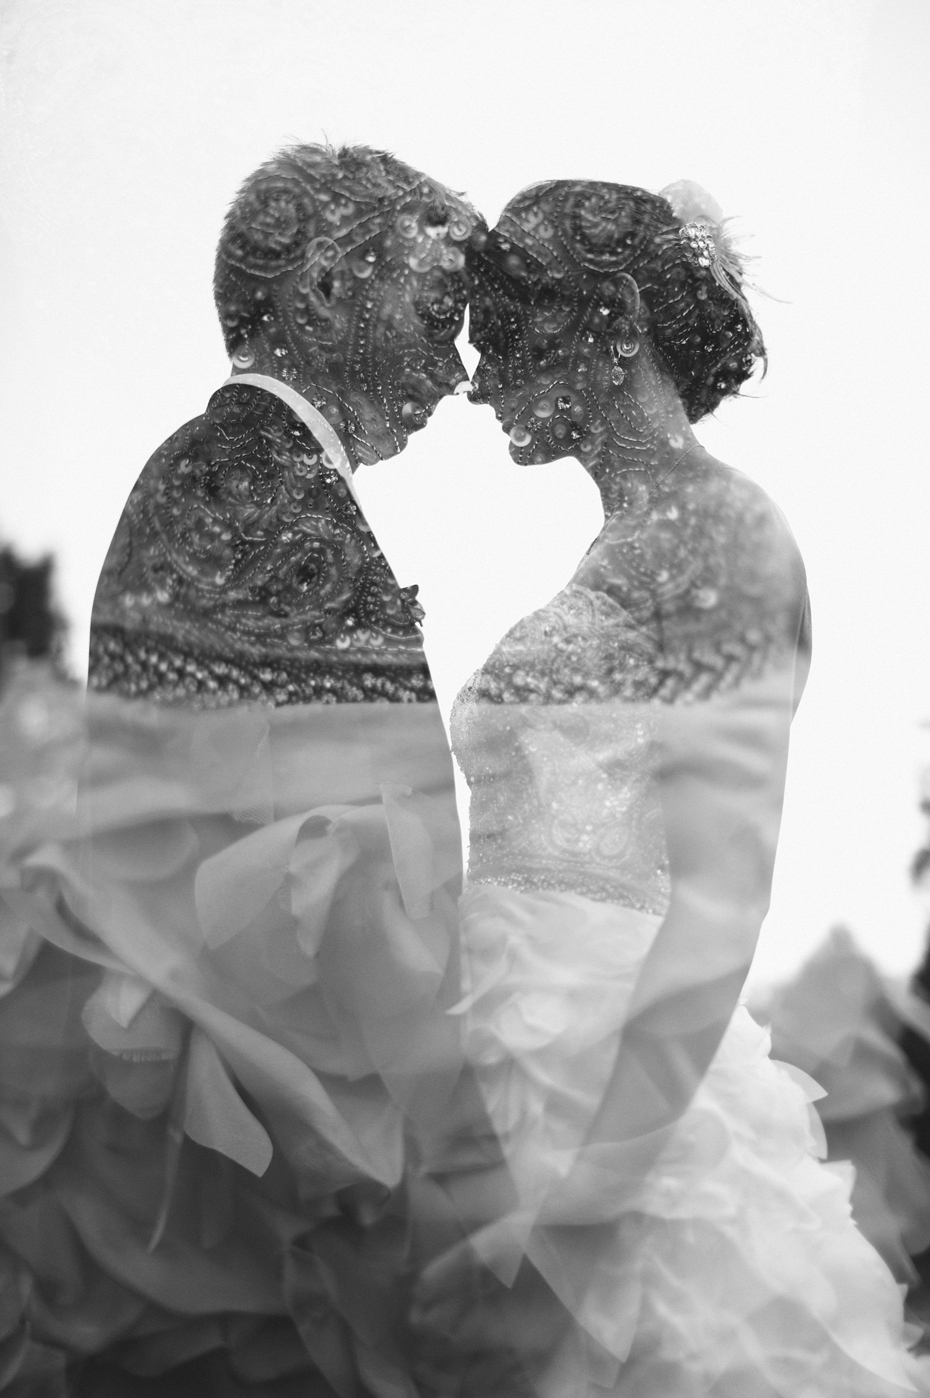 Documentary Detroit Michigan wedding photographer Heather Jowett presents her best photographs from 2013.